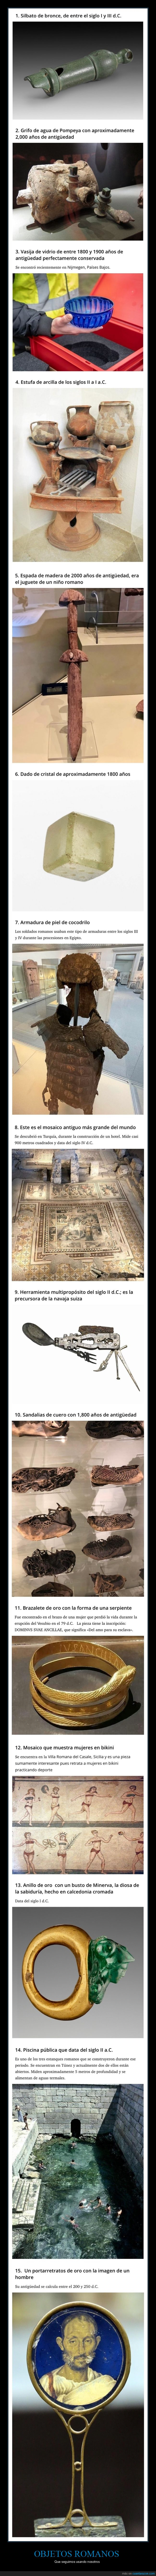 objetos,romanos